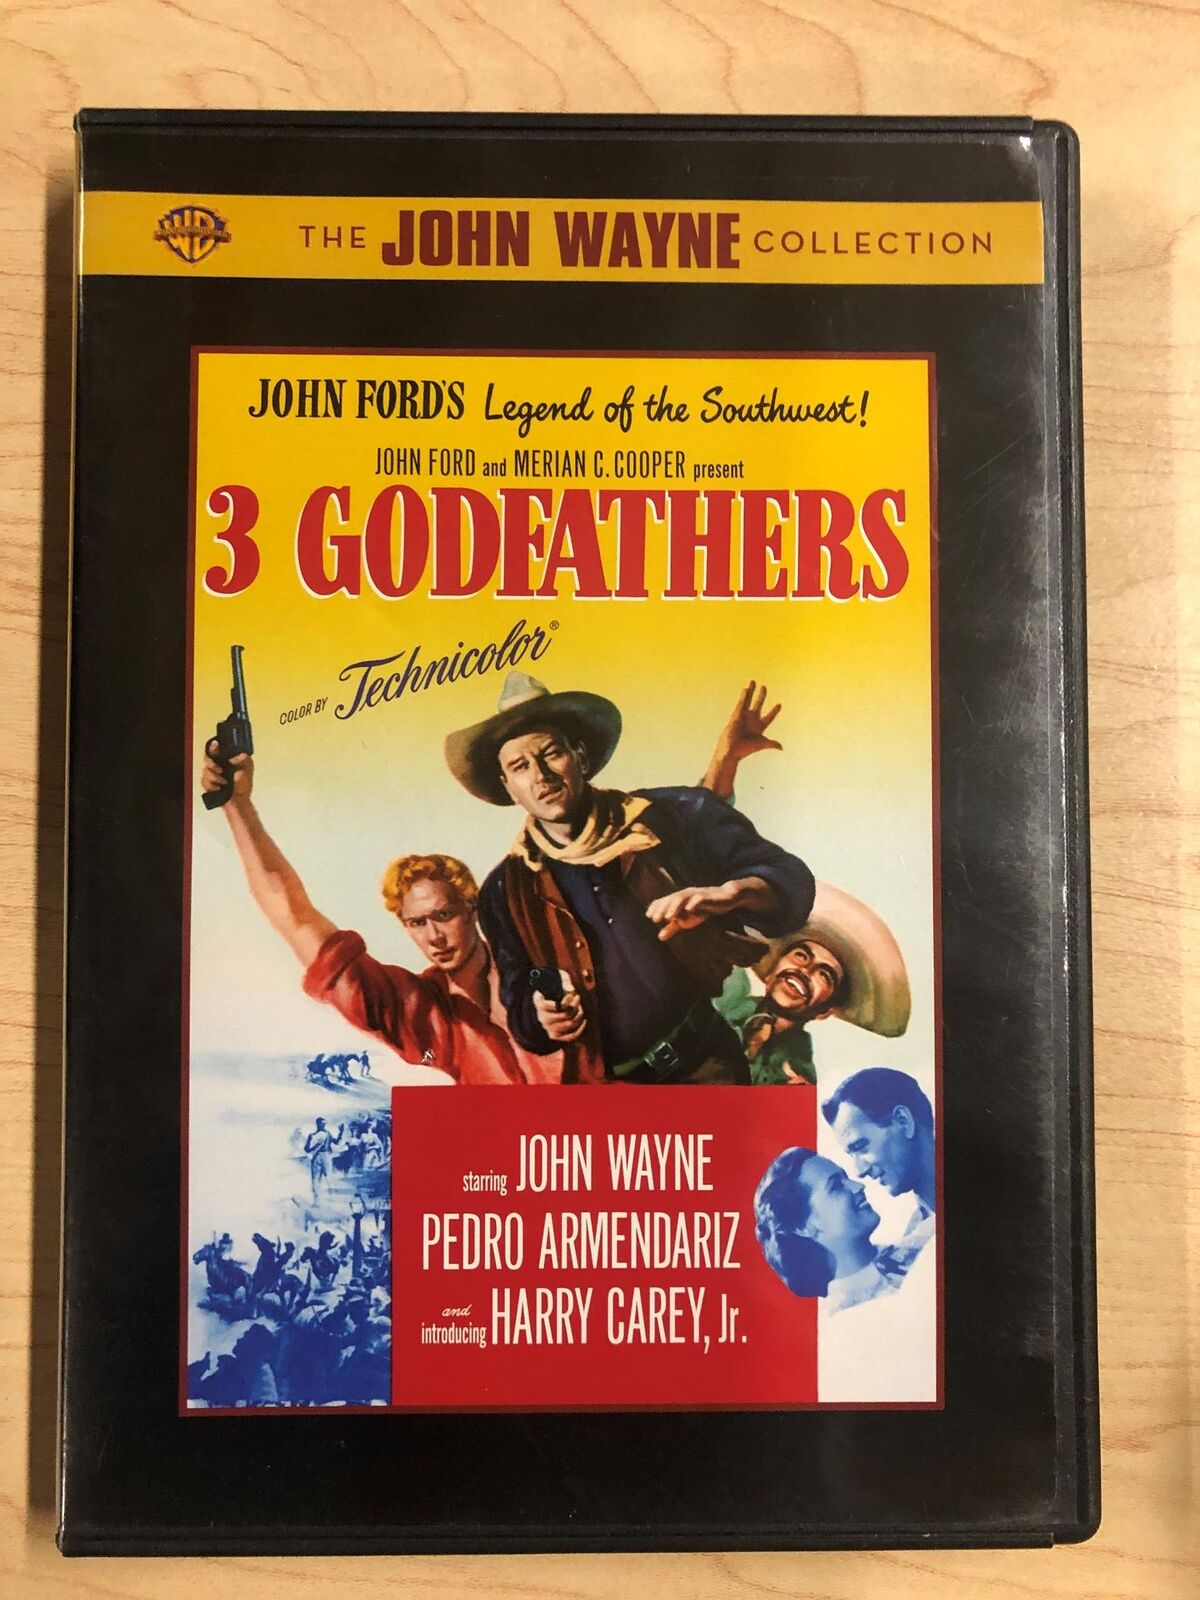 3 Godfathers (DVD, John Wayne Collection, 1948) - J1231